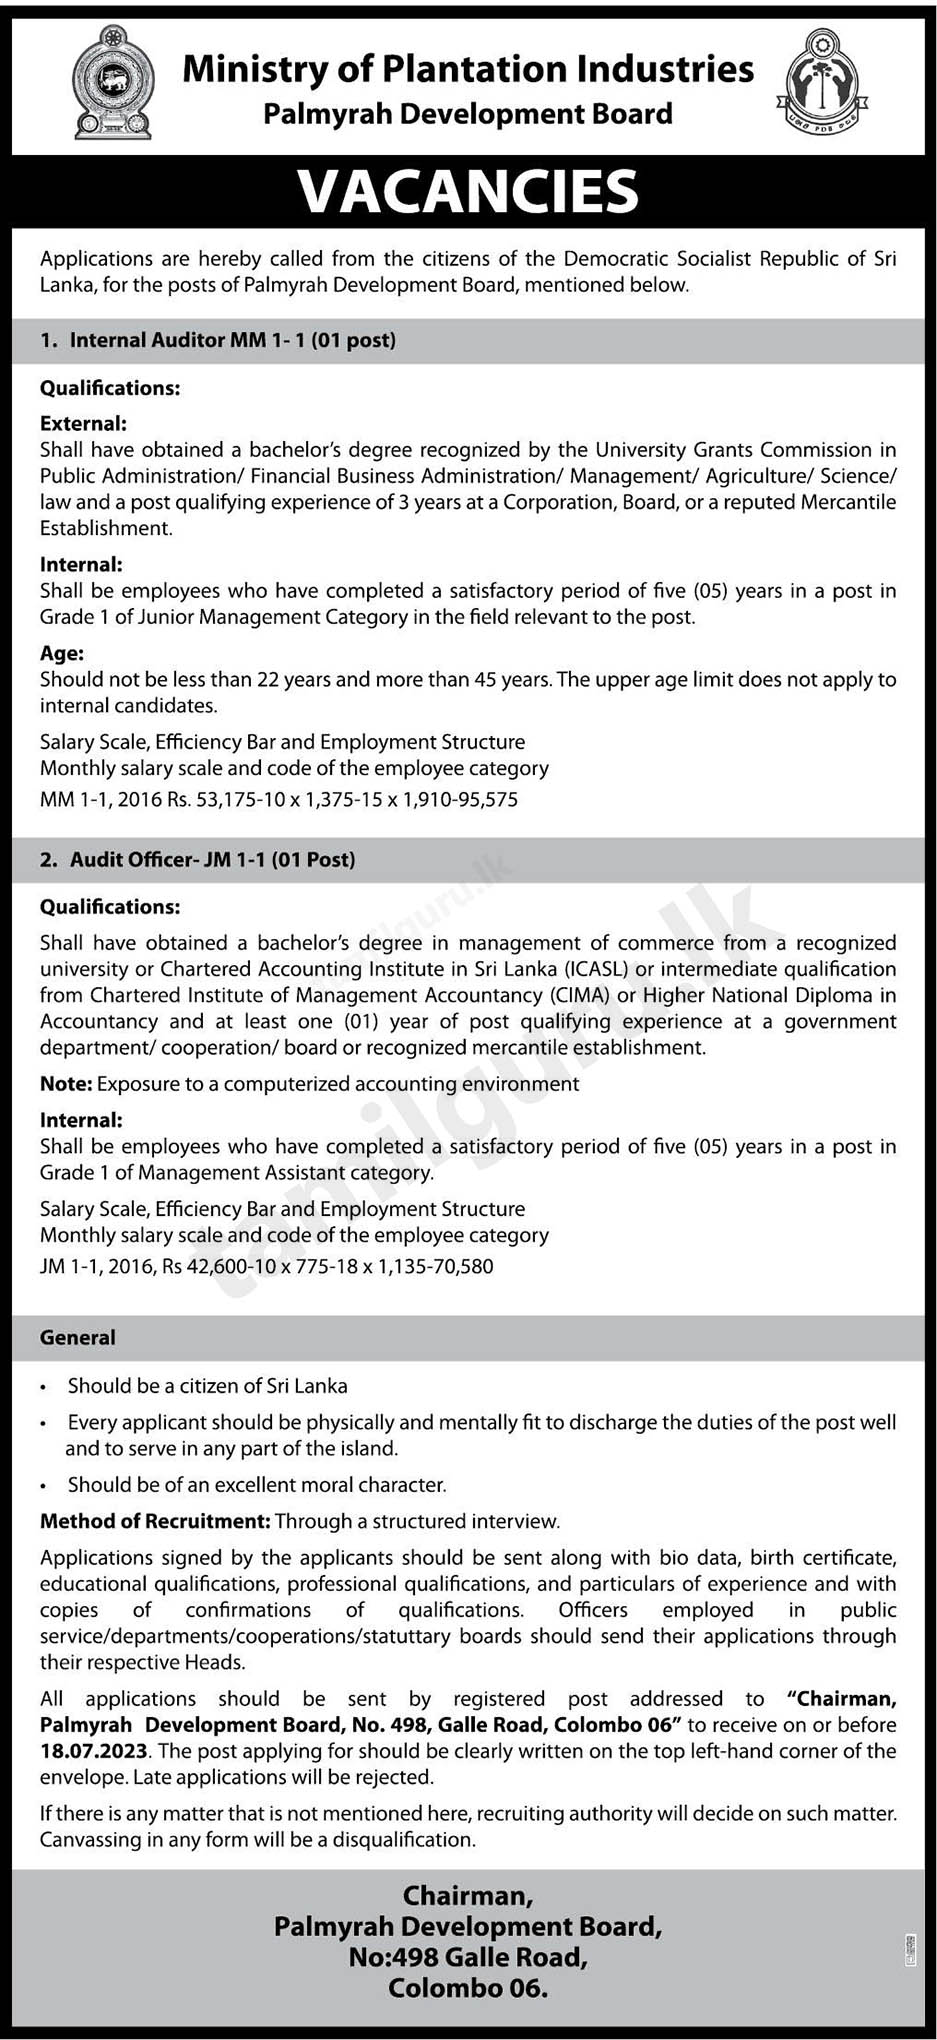 Palmyrah Development Board Vacancies 2023 July - Internal Auditor, Audit Officer